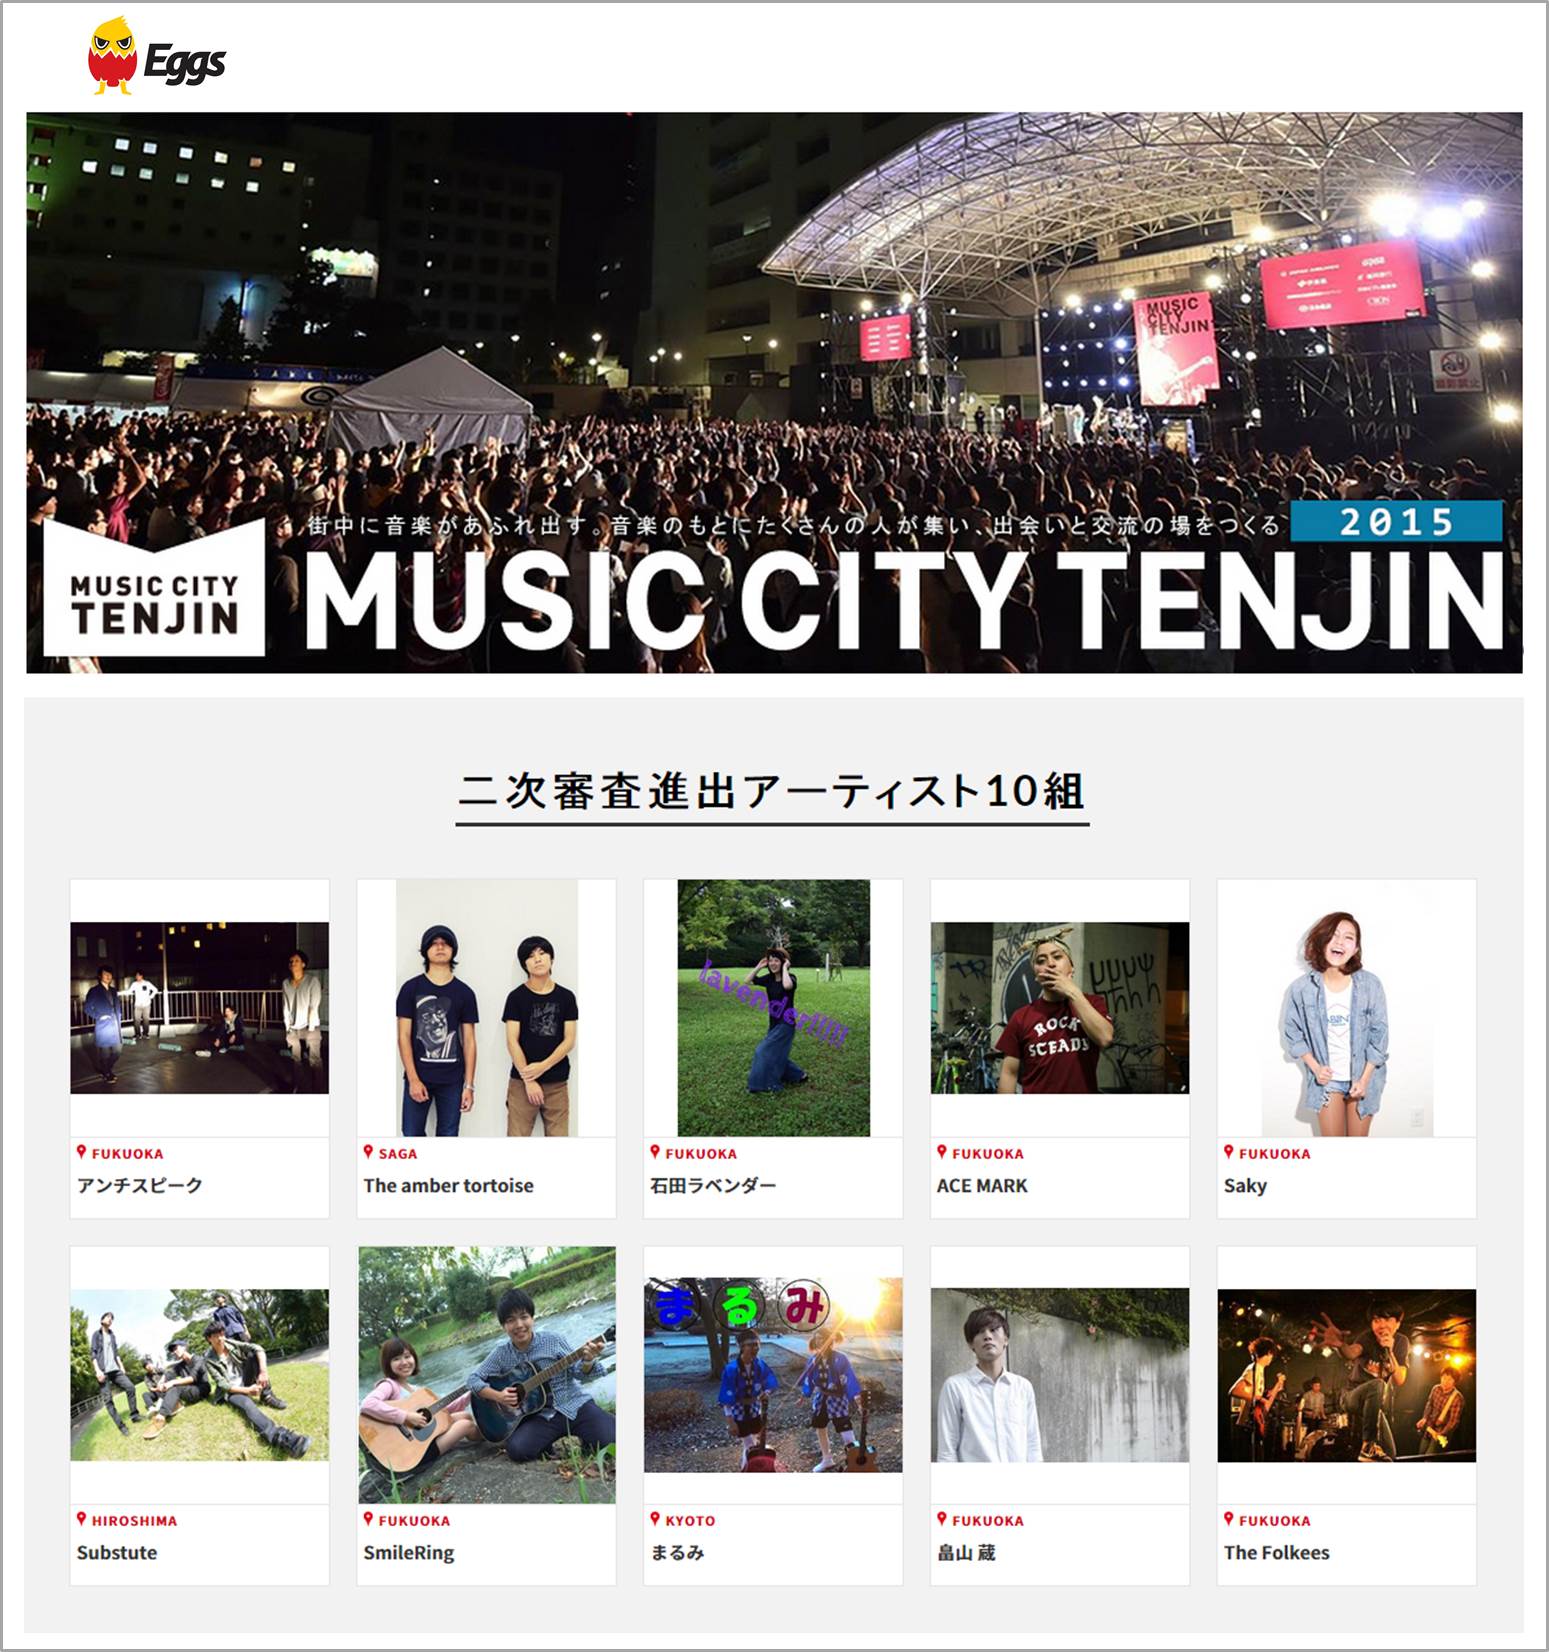 Eggsプロジェクト 推薦 Music City Tenjin 出演アーティスト決定 メインステージ出演めざしてネット投票開始 公開ライブ審査へ挑戦 レコチョクのプレスリリース